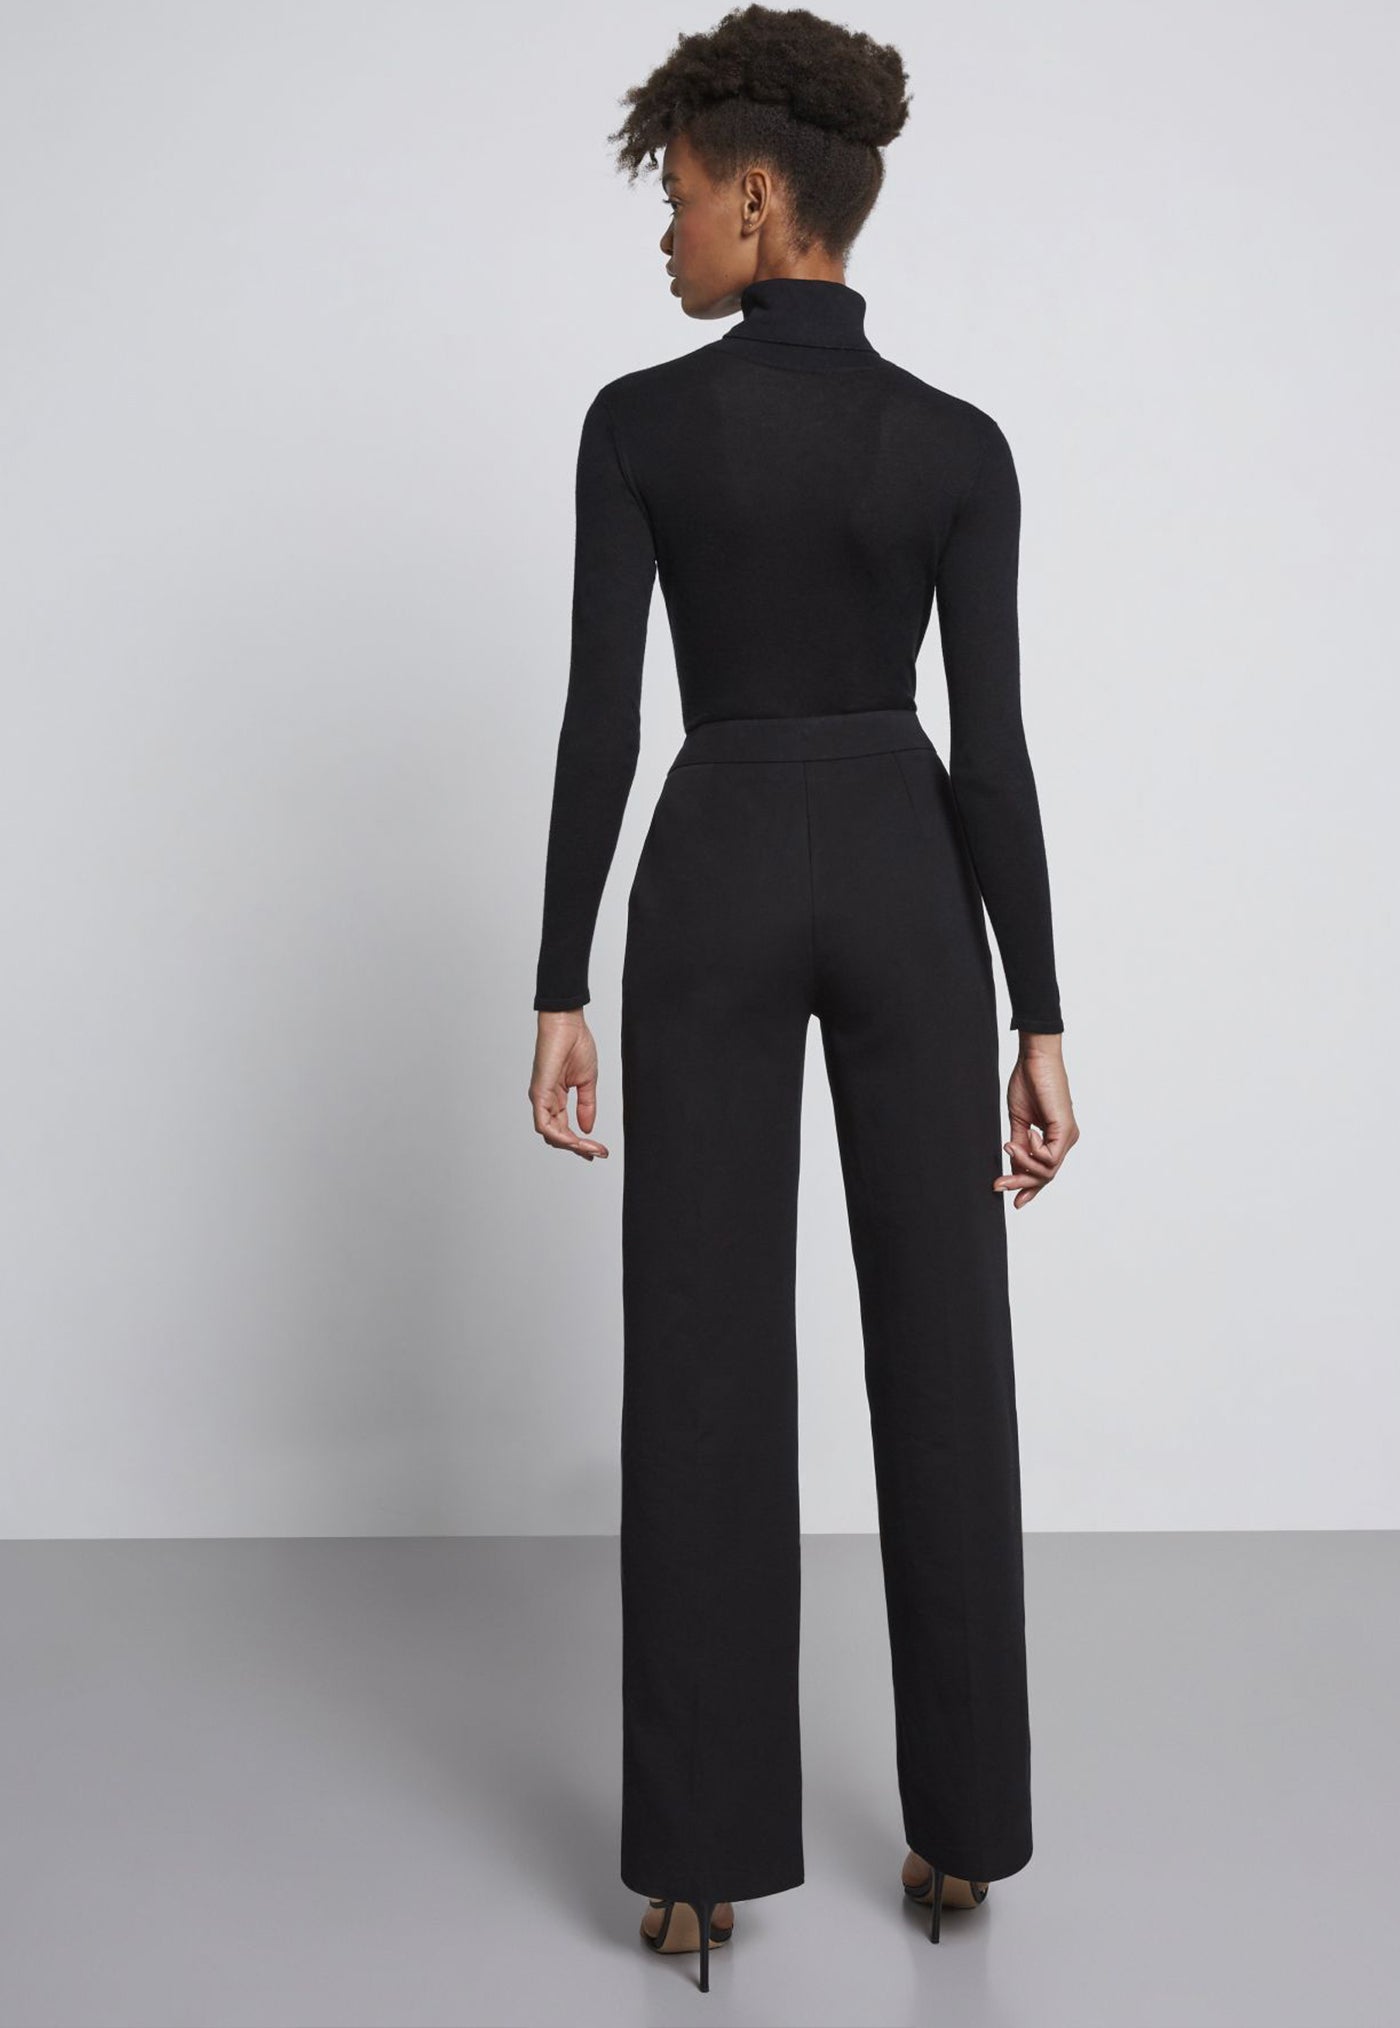 Silk Turtleneck Bodysuit - Black sold by Angel Divine